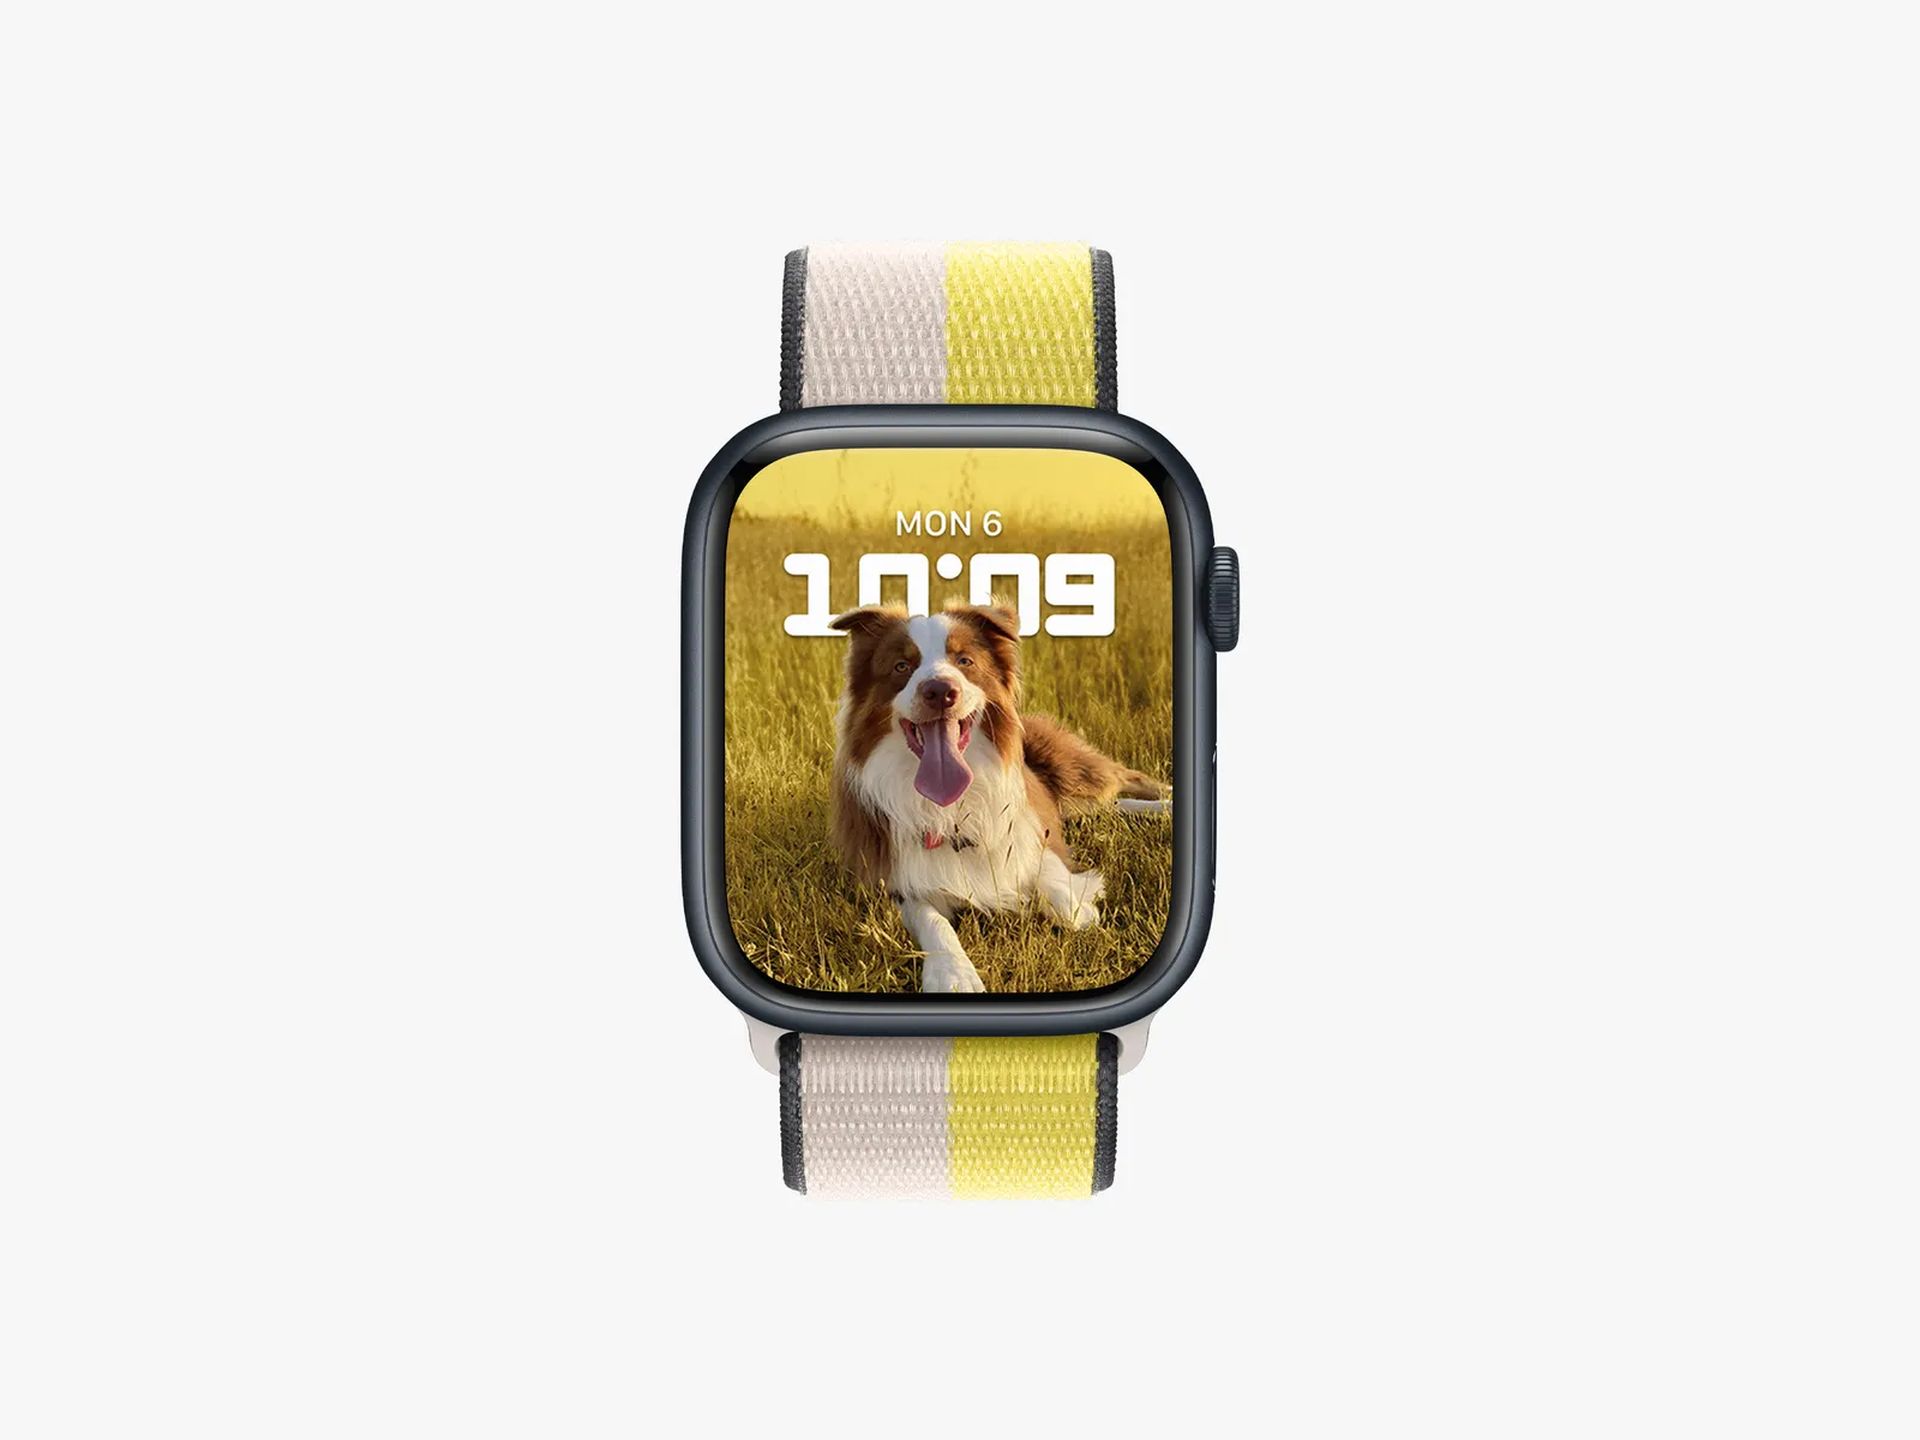 New watchOS 9 features